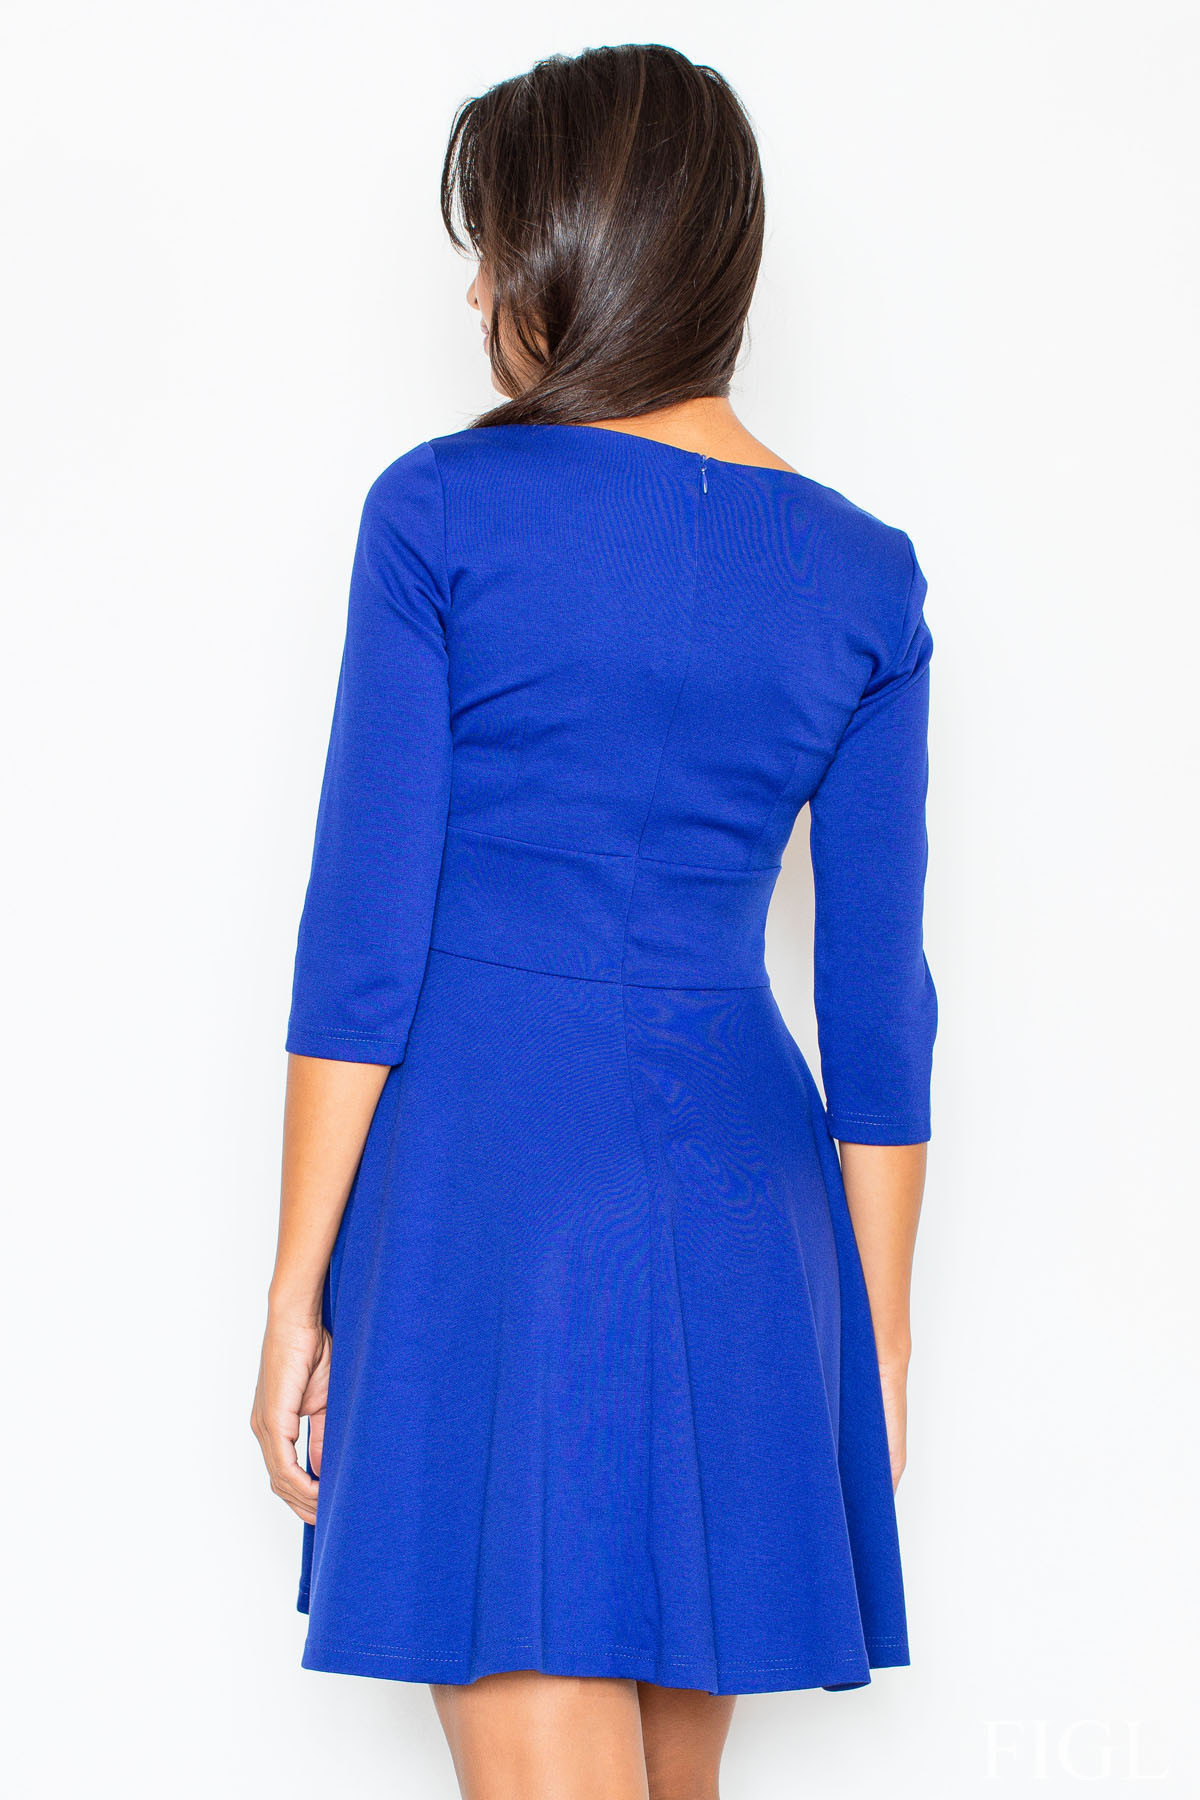 Veronica M081 Modré šaty - Figl L